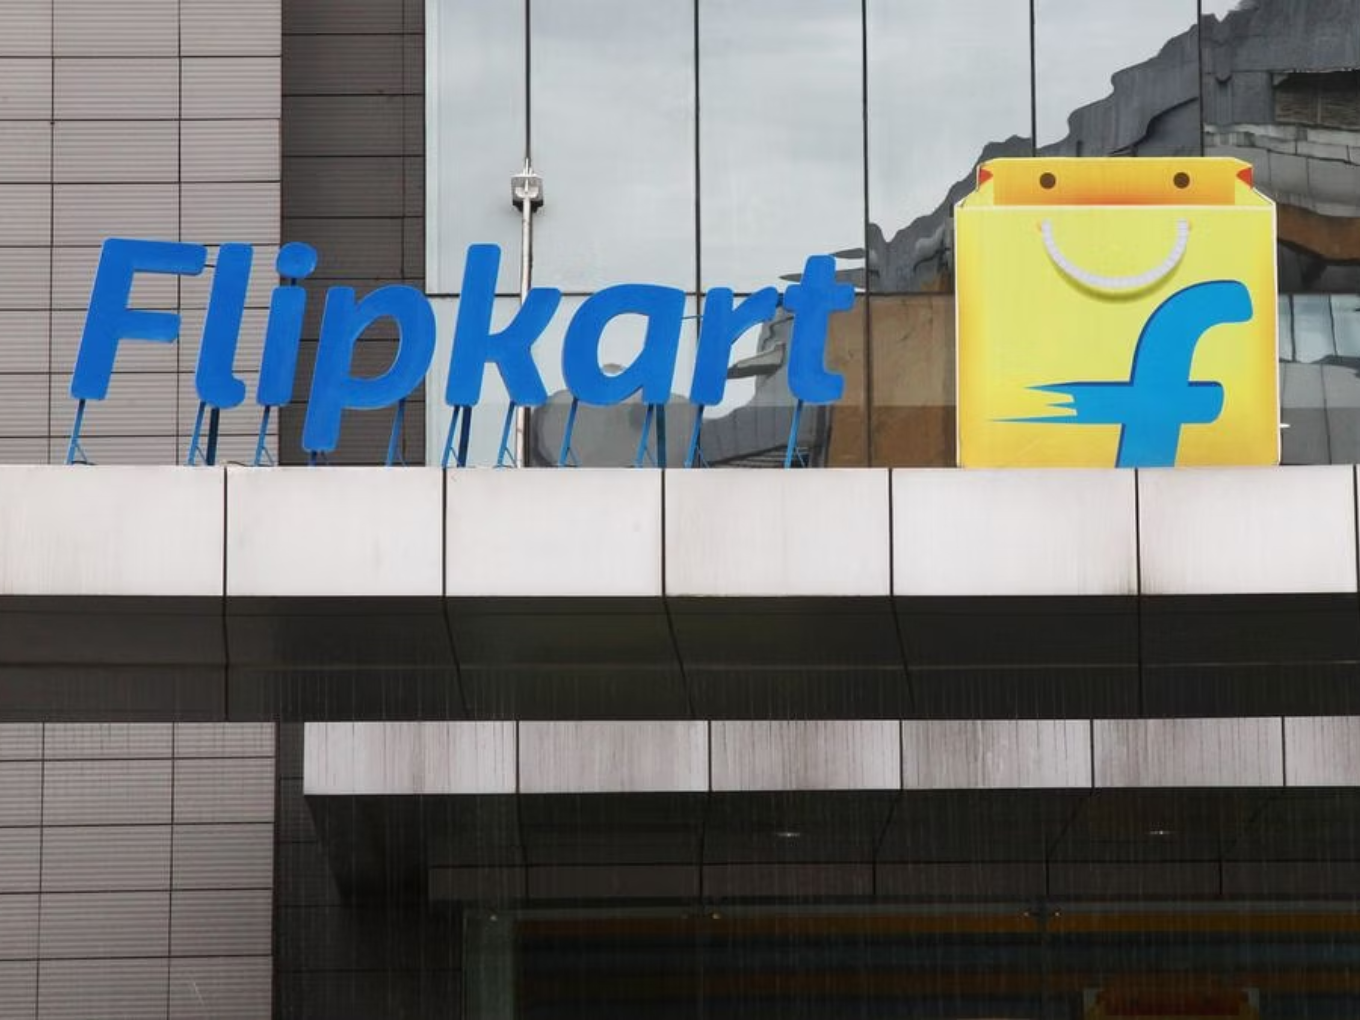 Flipkart unveils new brand promise, launches new 'superhero